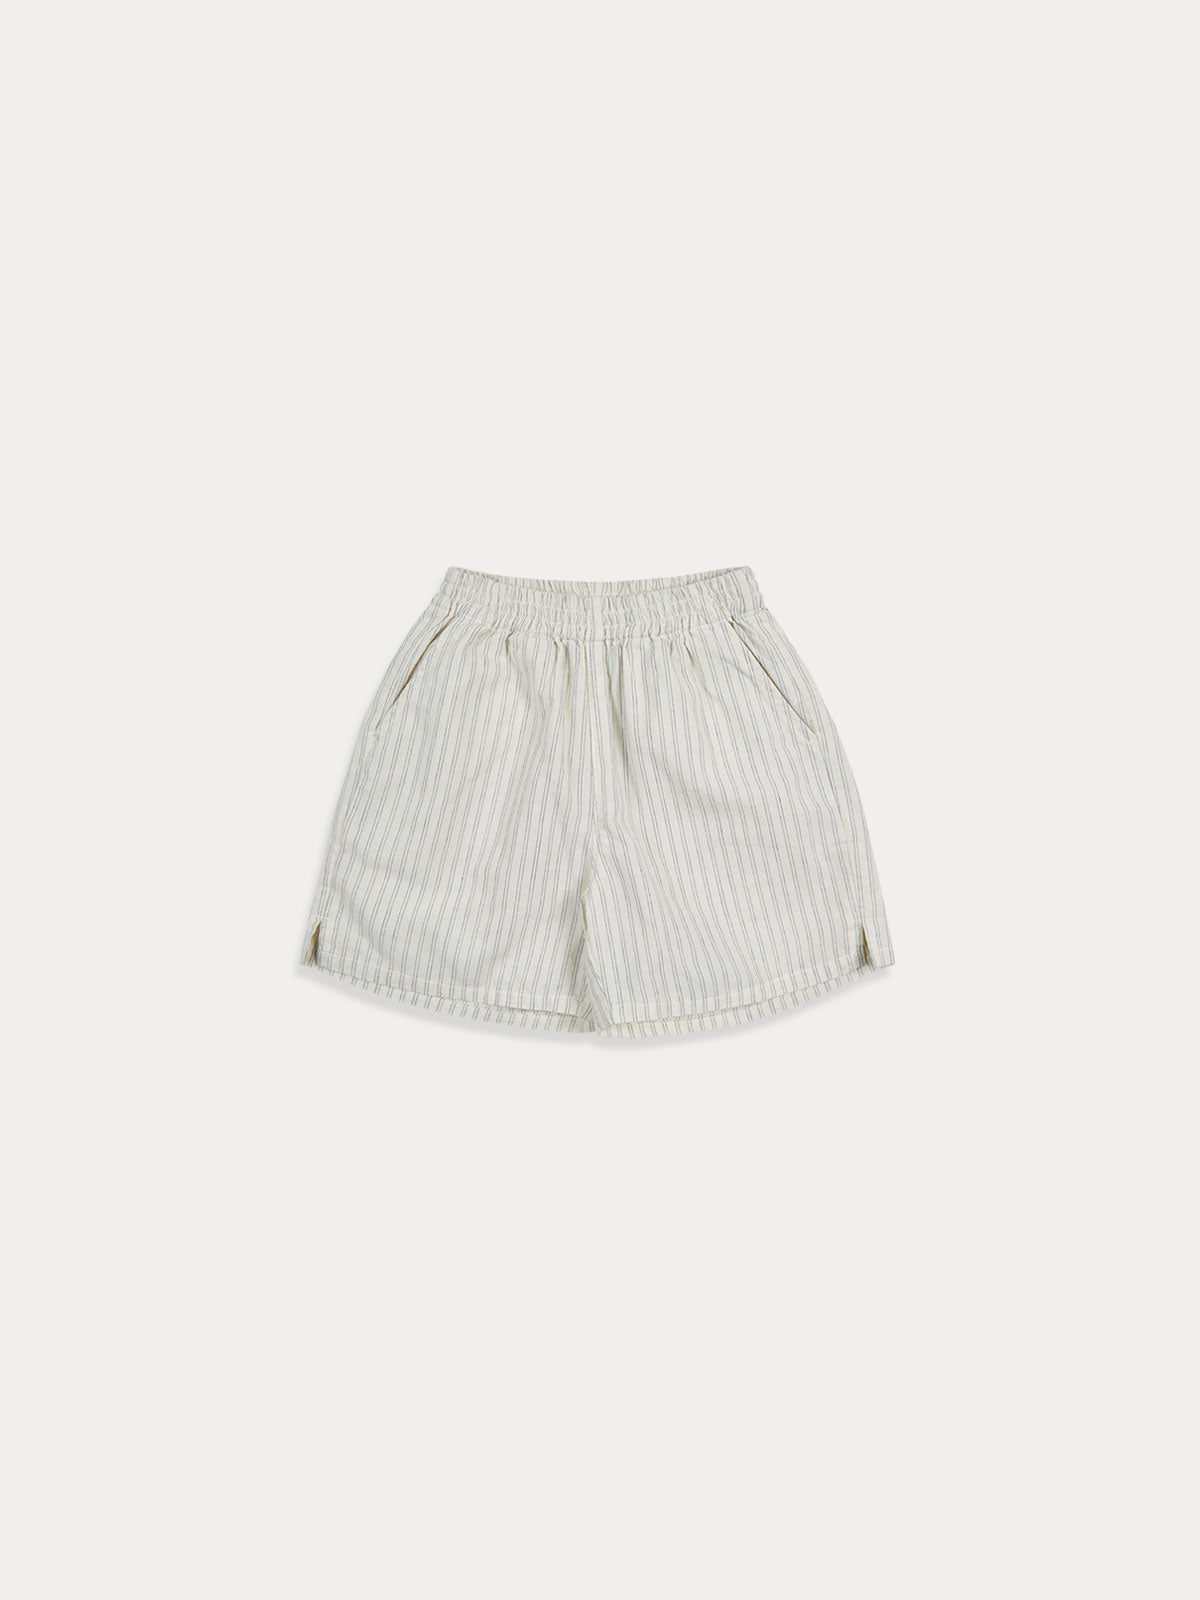 Aube Stripe Shorts